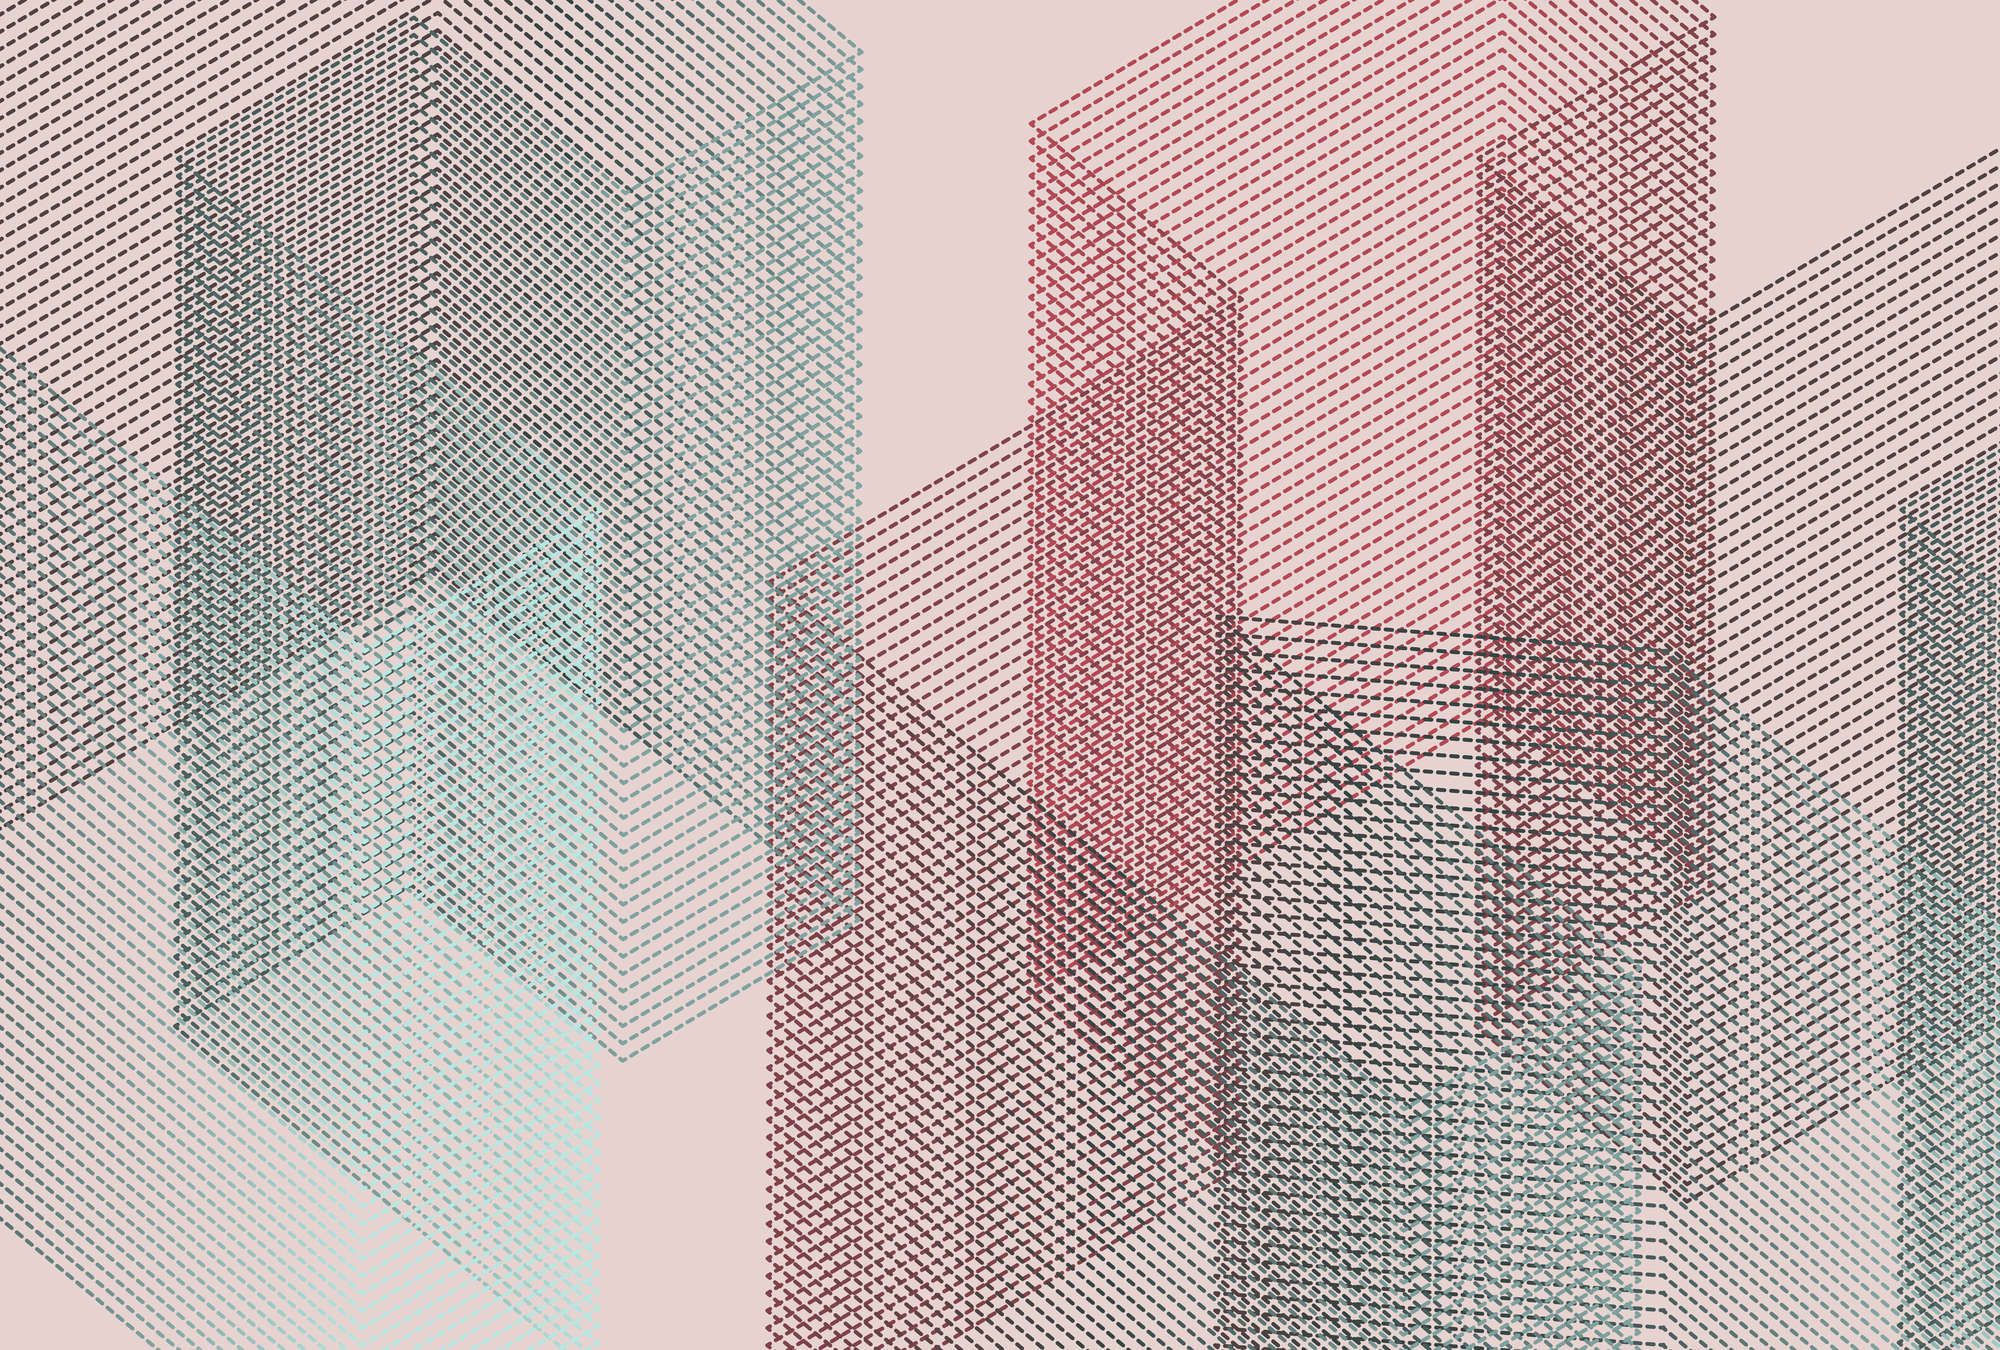             Fotomural »mesh 1« - Diseño abstracto 3D - Rojo, Azul | Material no tejido de textura ligera
        